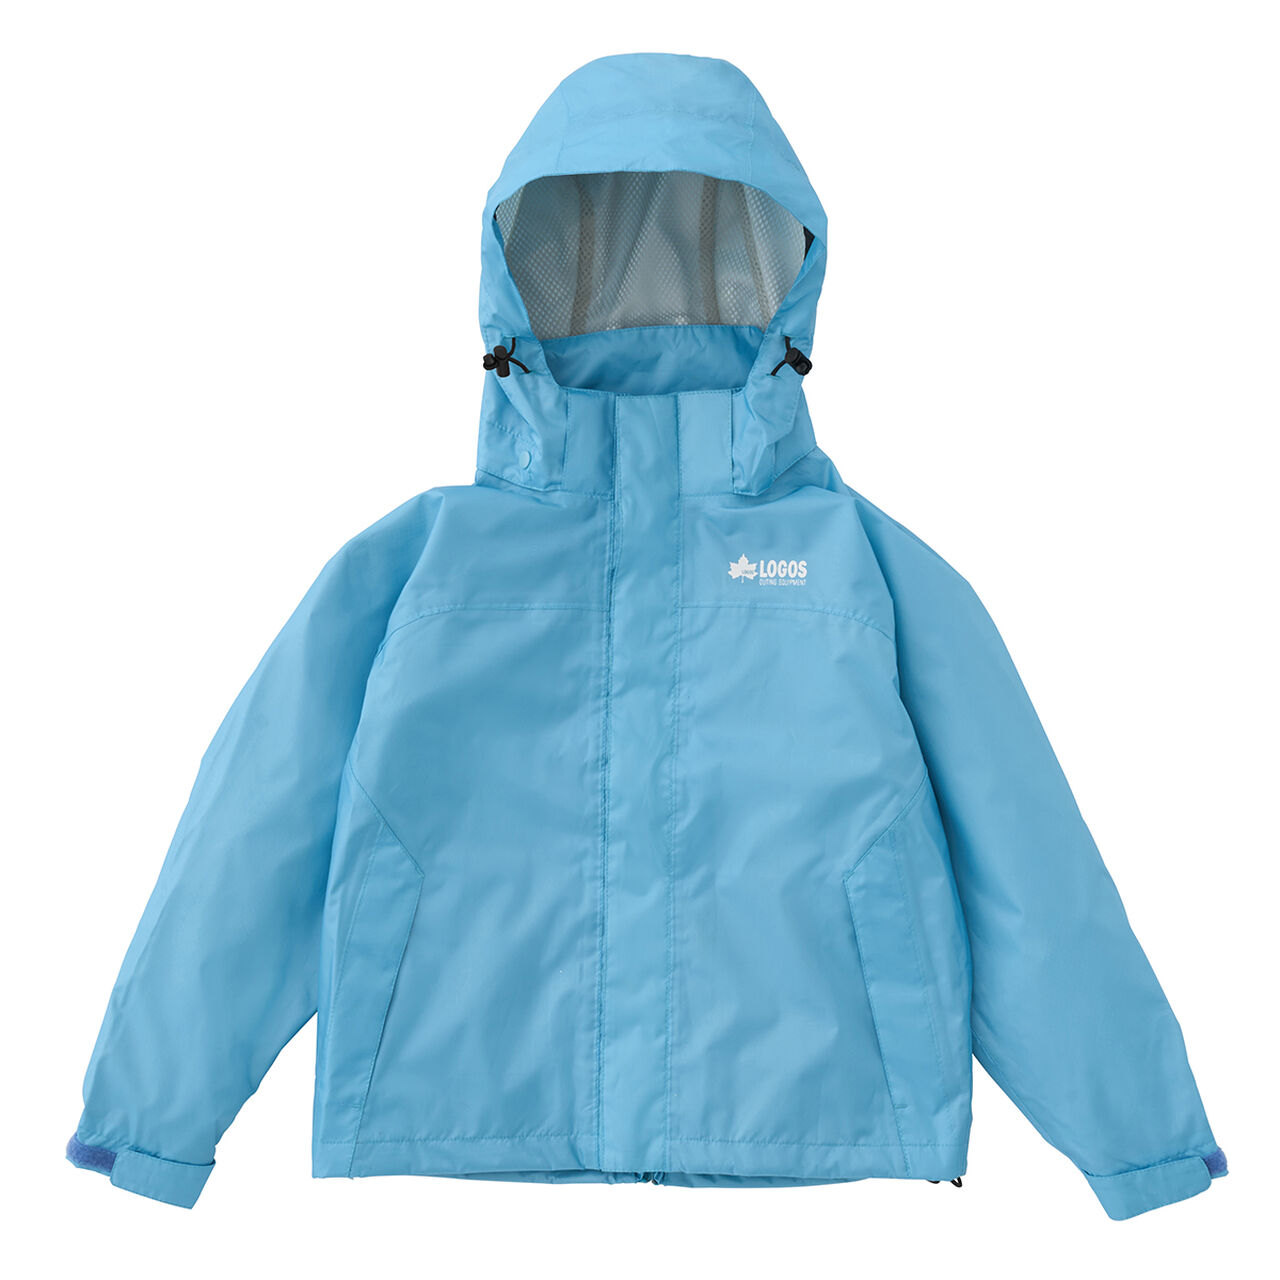 LOGOS Kids' Rain Suits,Blue, large image number 0